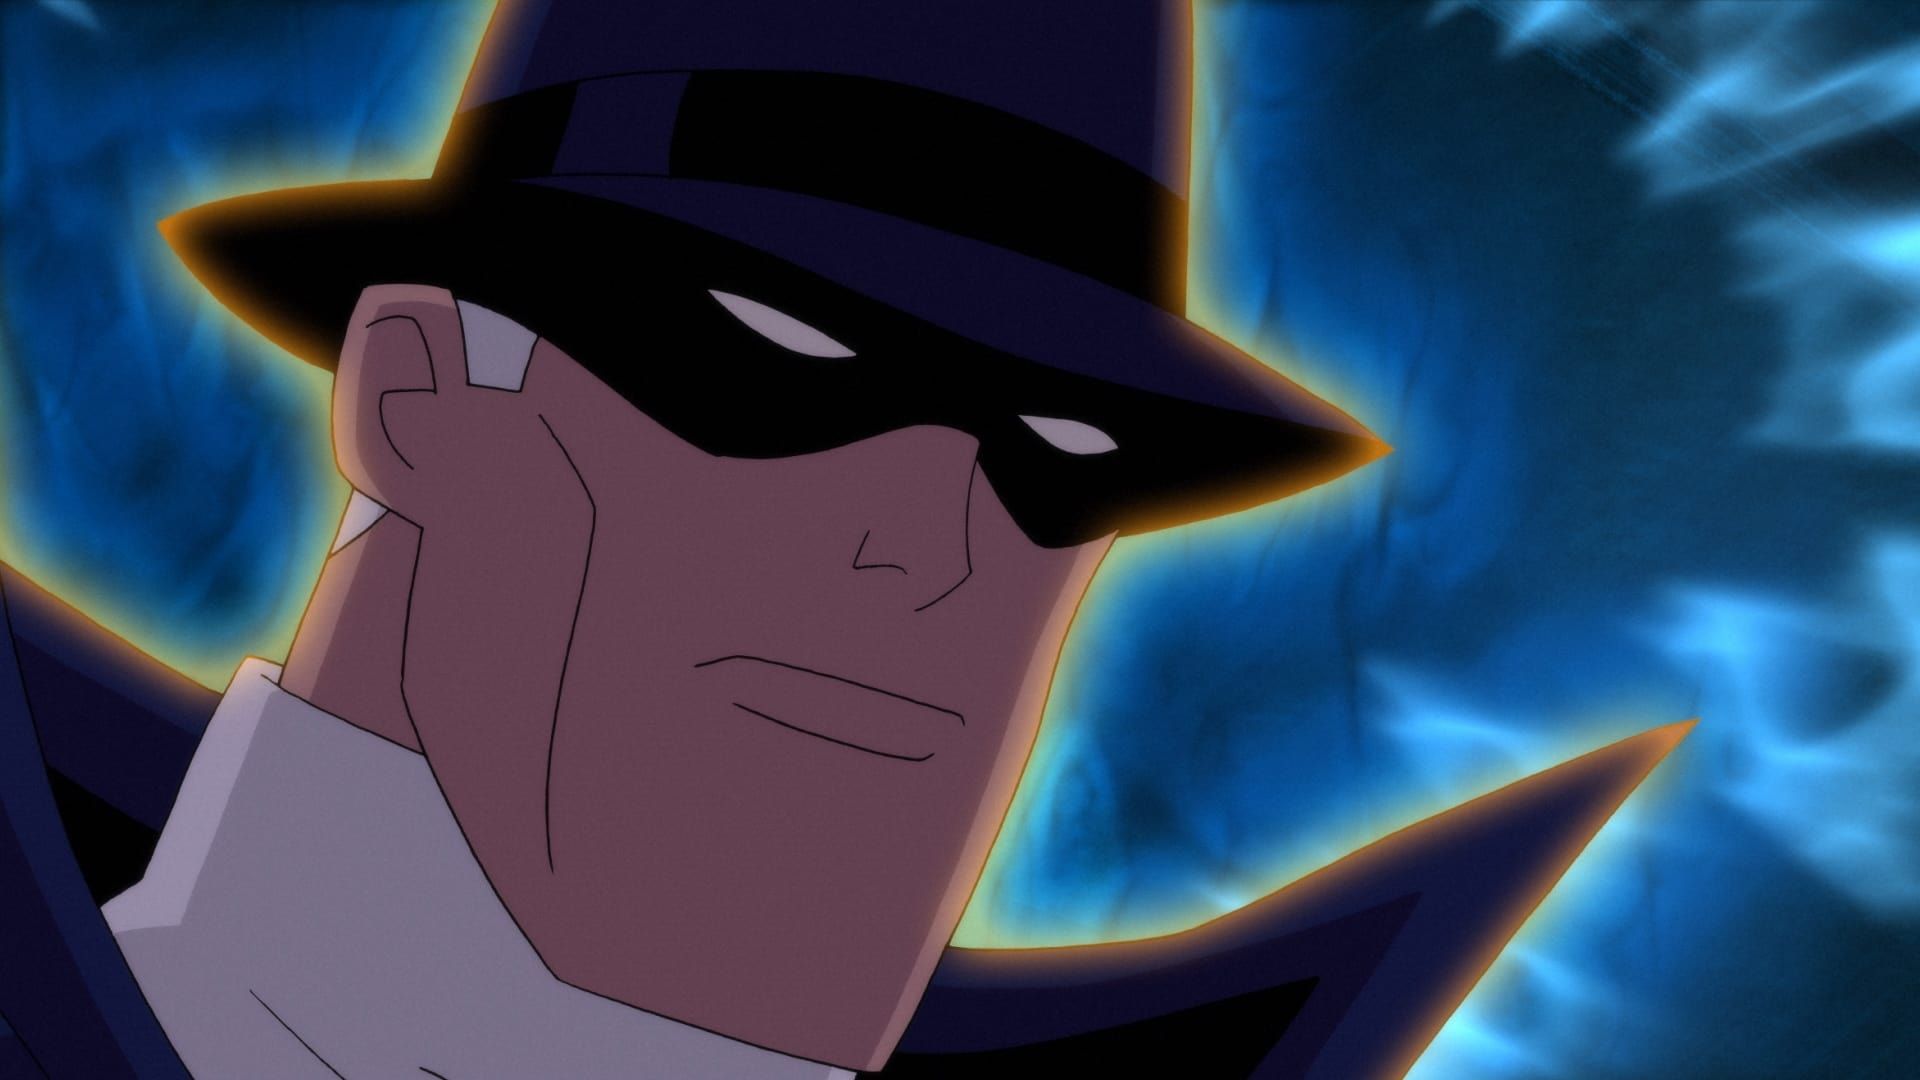 DC Showcase: The Phantom Stranger background